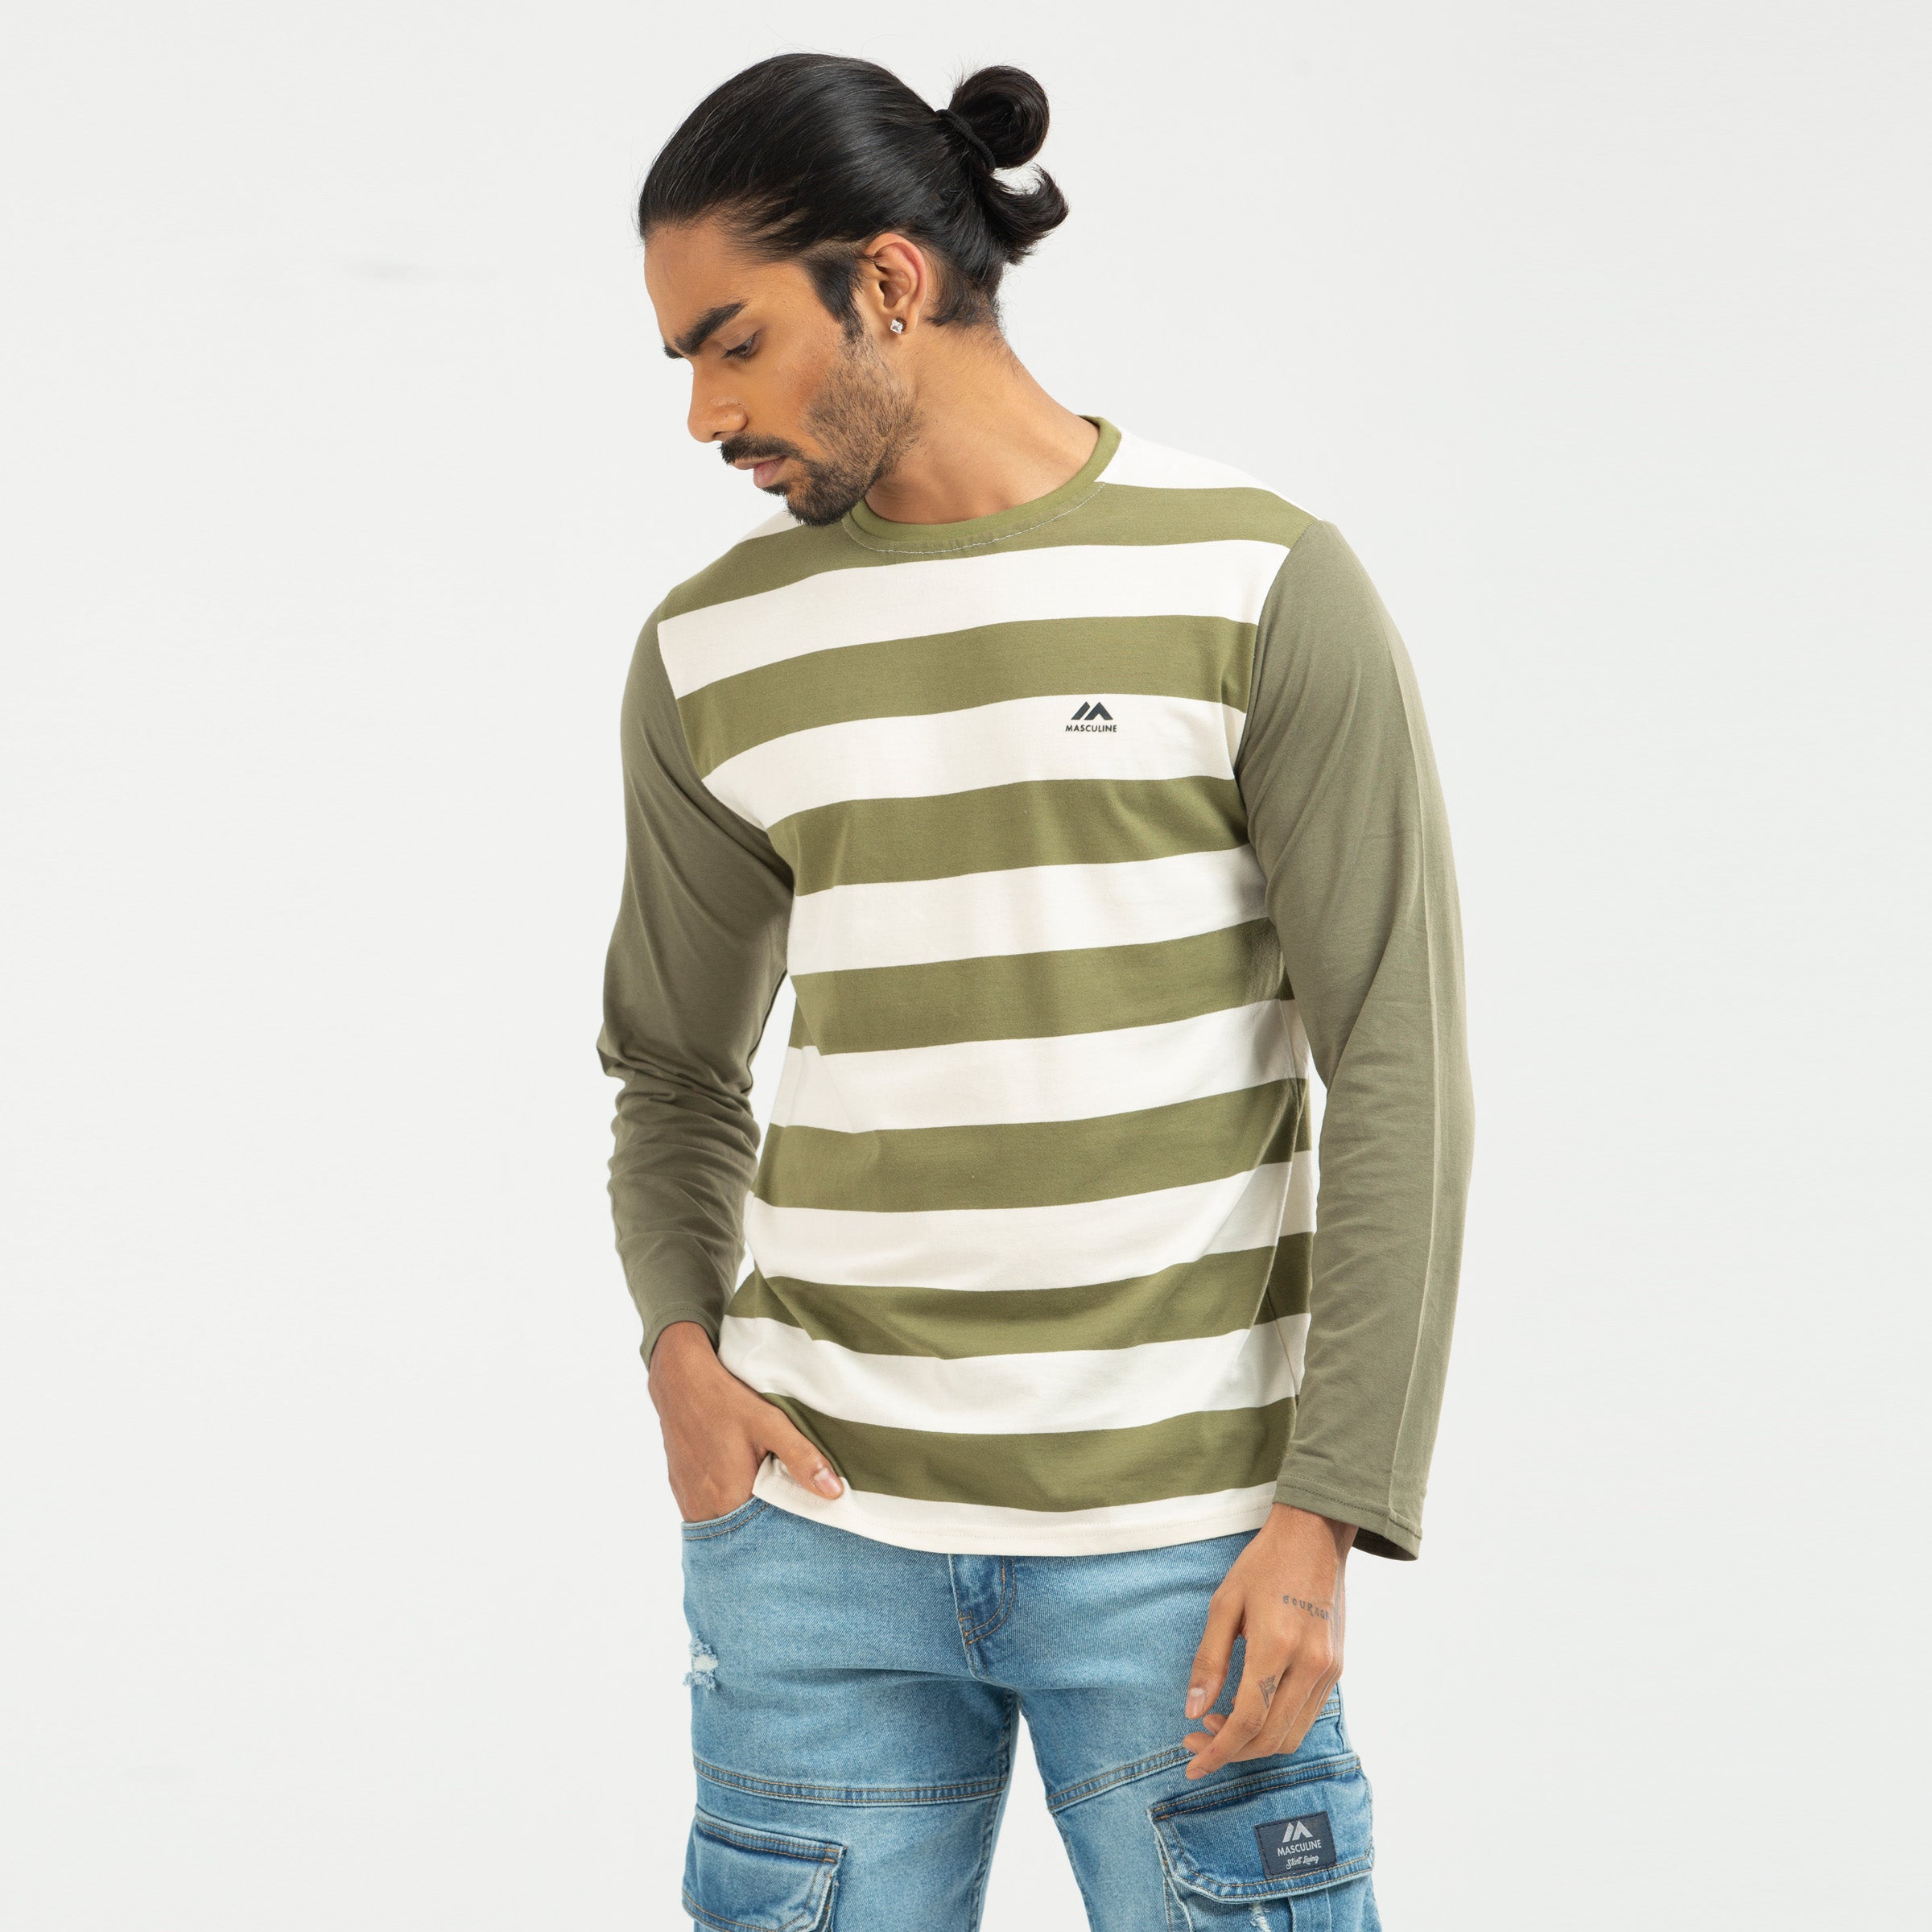 Stripe Long Sleeve T-shirt - Olive & white